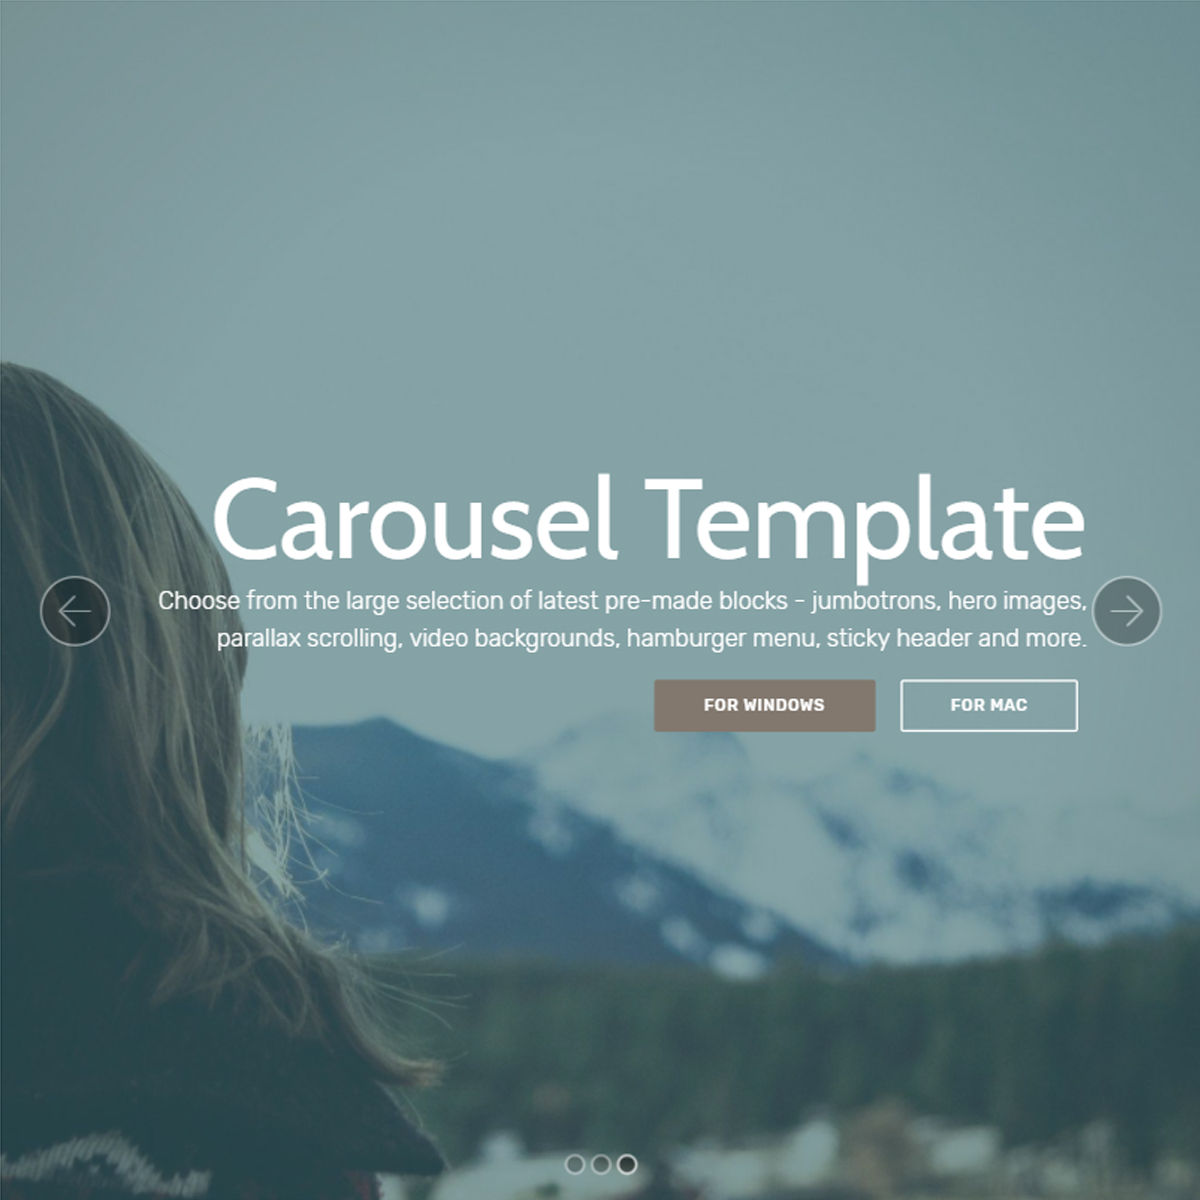 Carousel Free Download For Mac